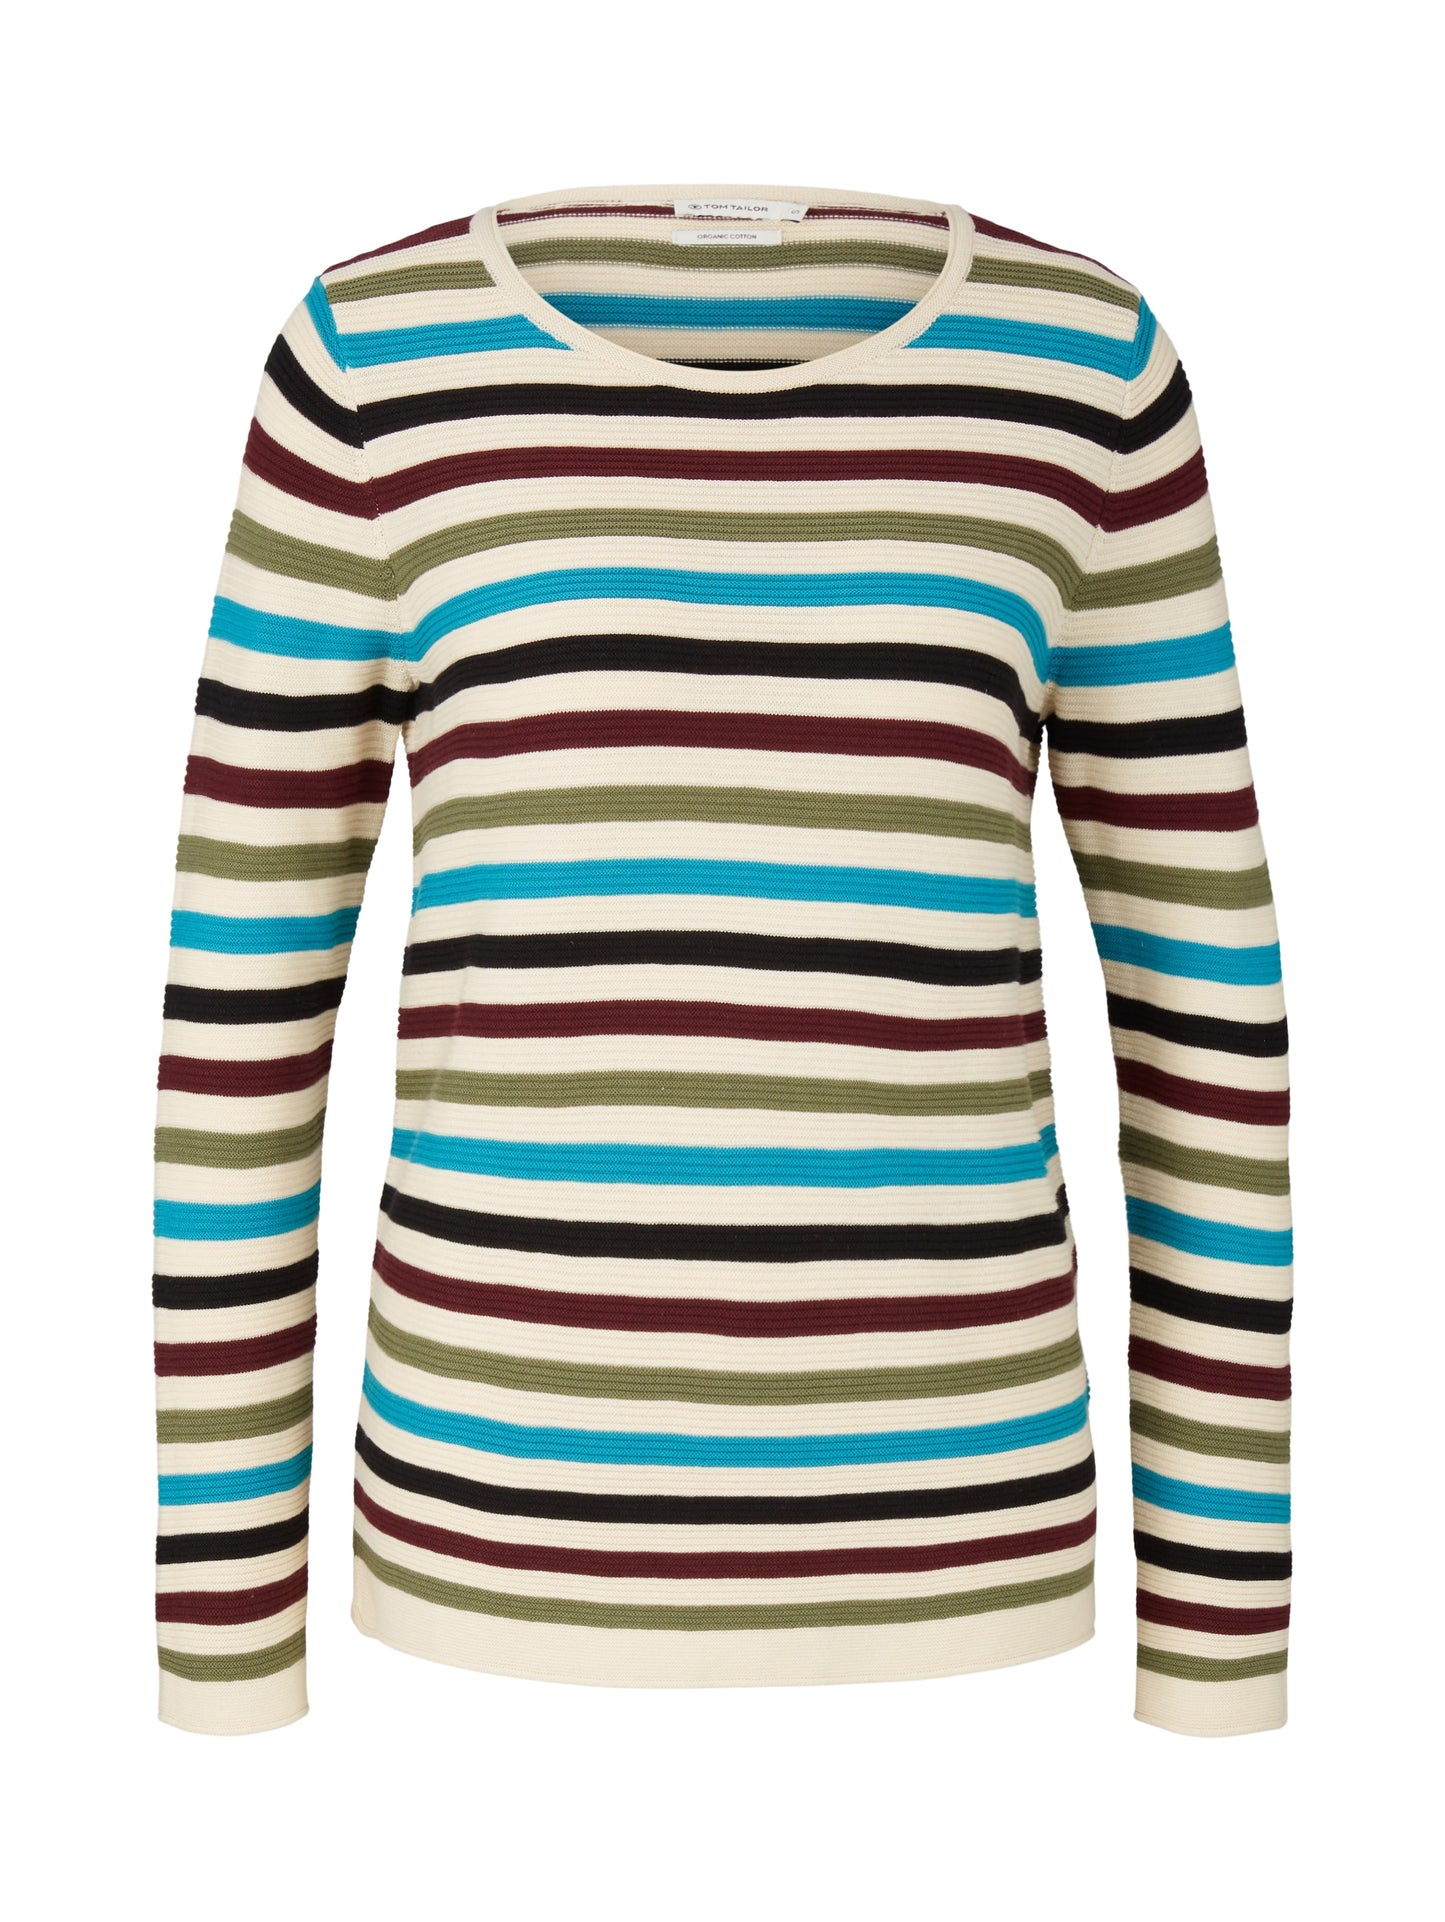 sweater new ottoman, teal blue butter stripe